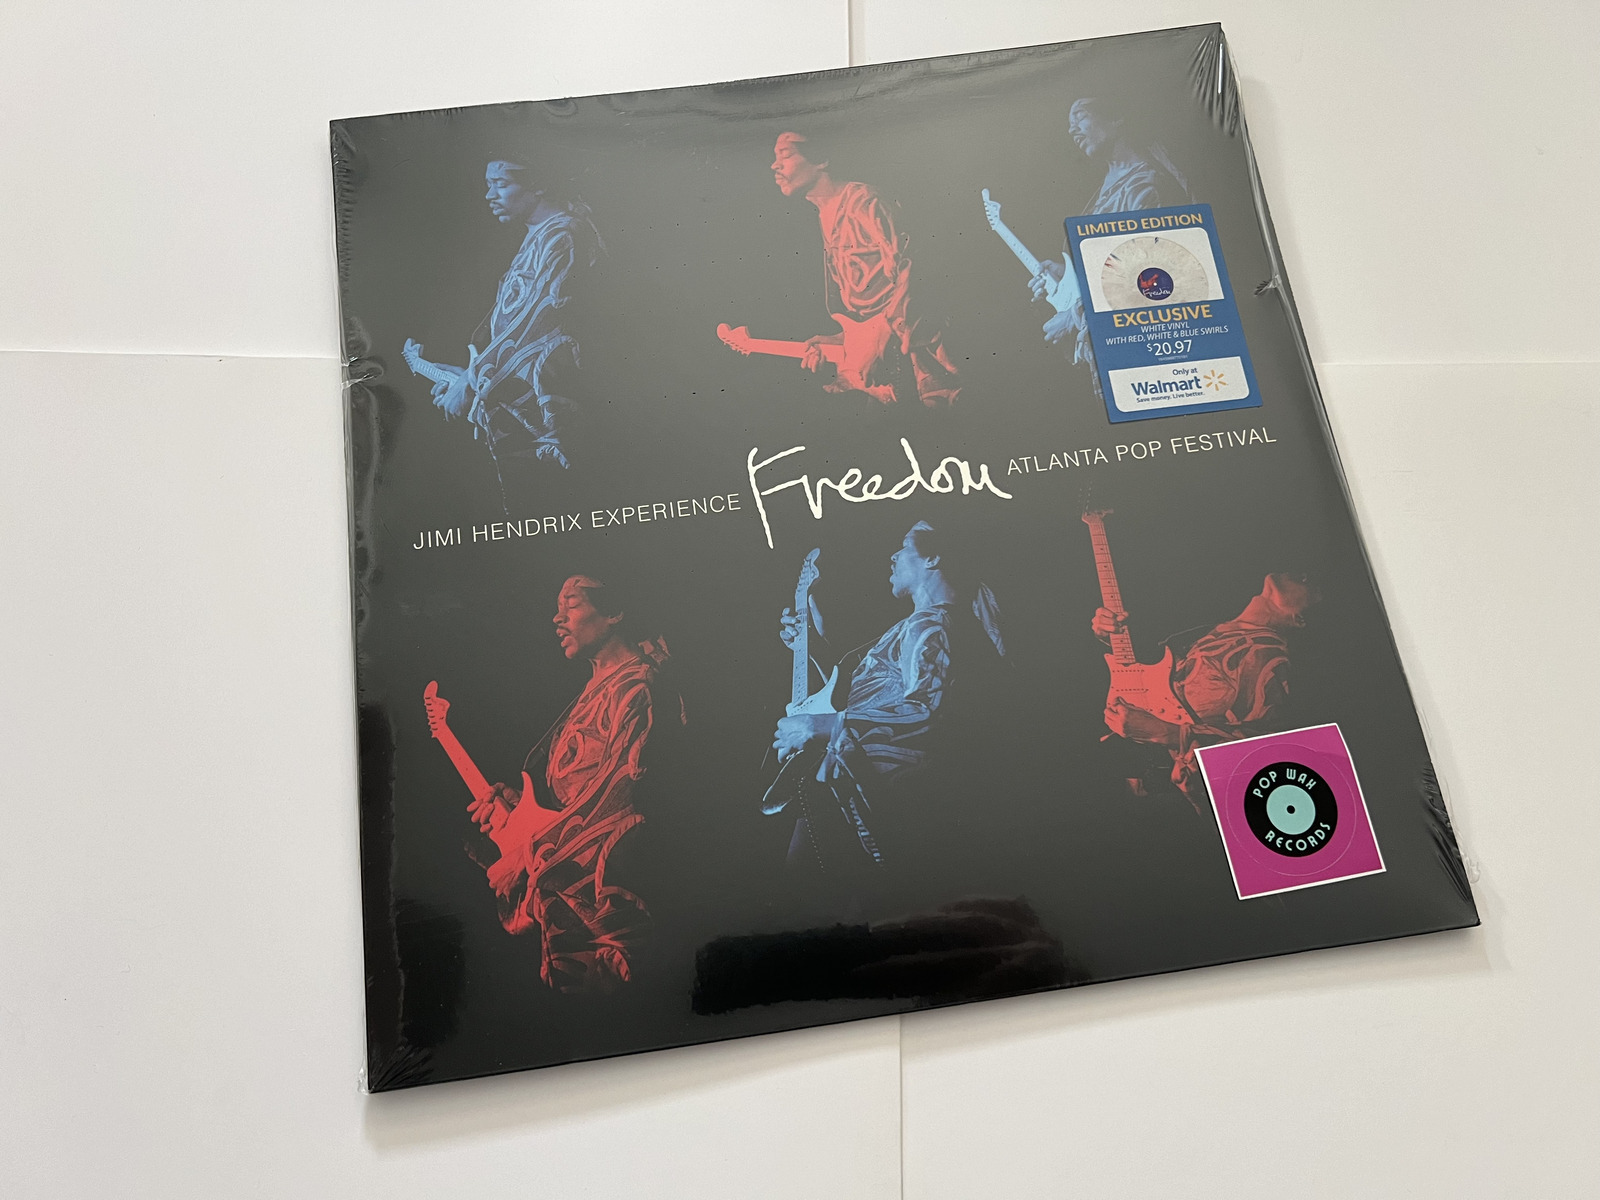 Jimi Hendrix - Freedom Atlanta Pop Festival White Red & Blue Vinyl LP Record